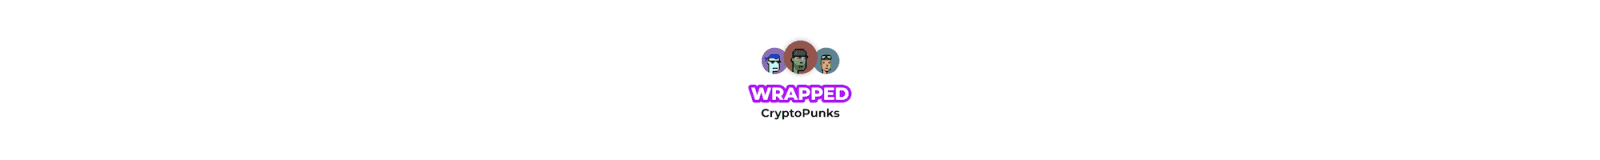 Wrapped Cryptopunks